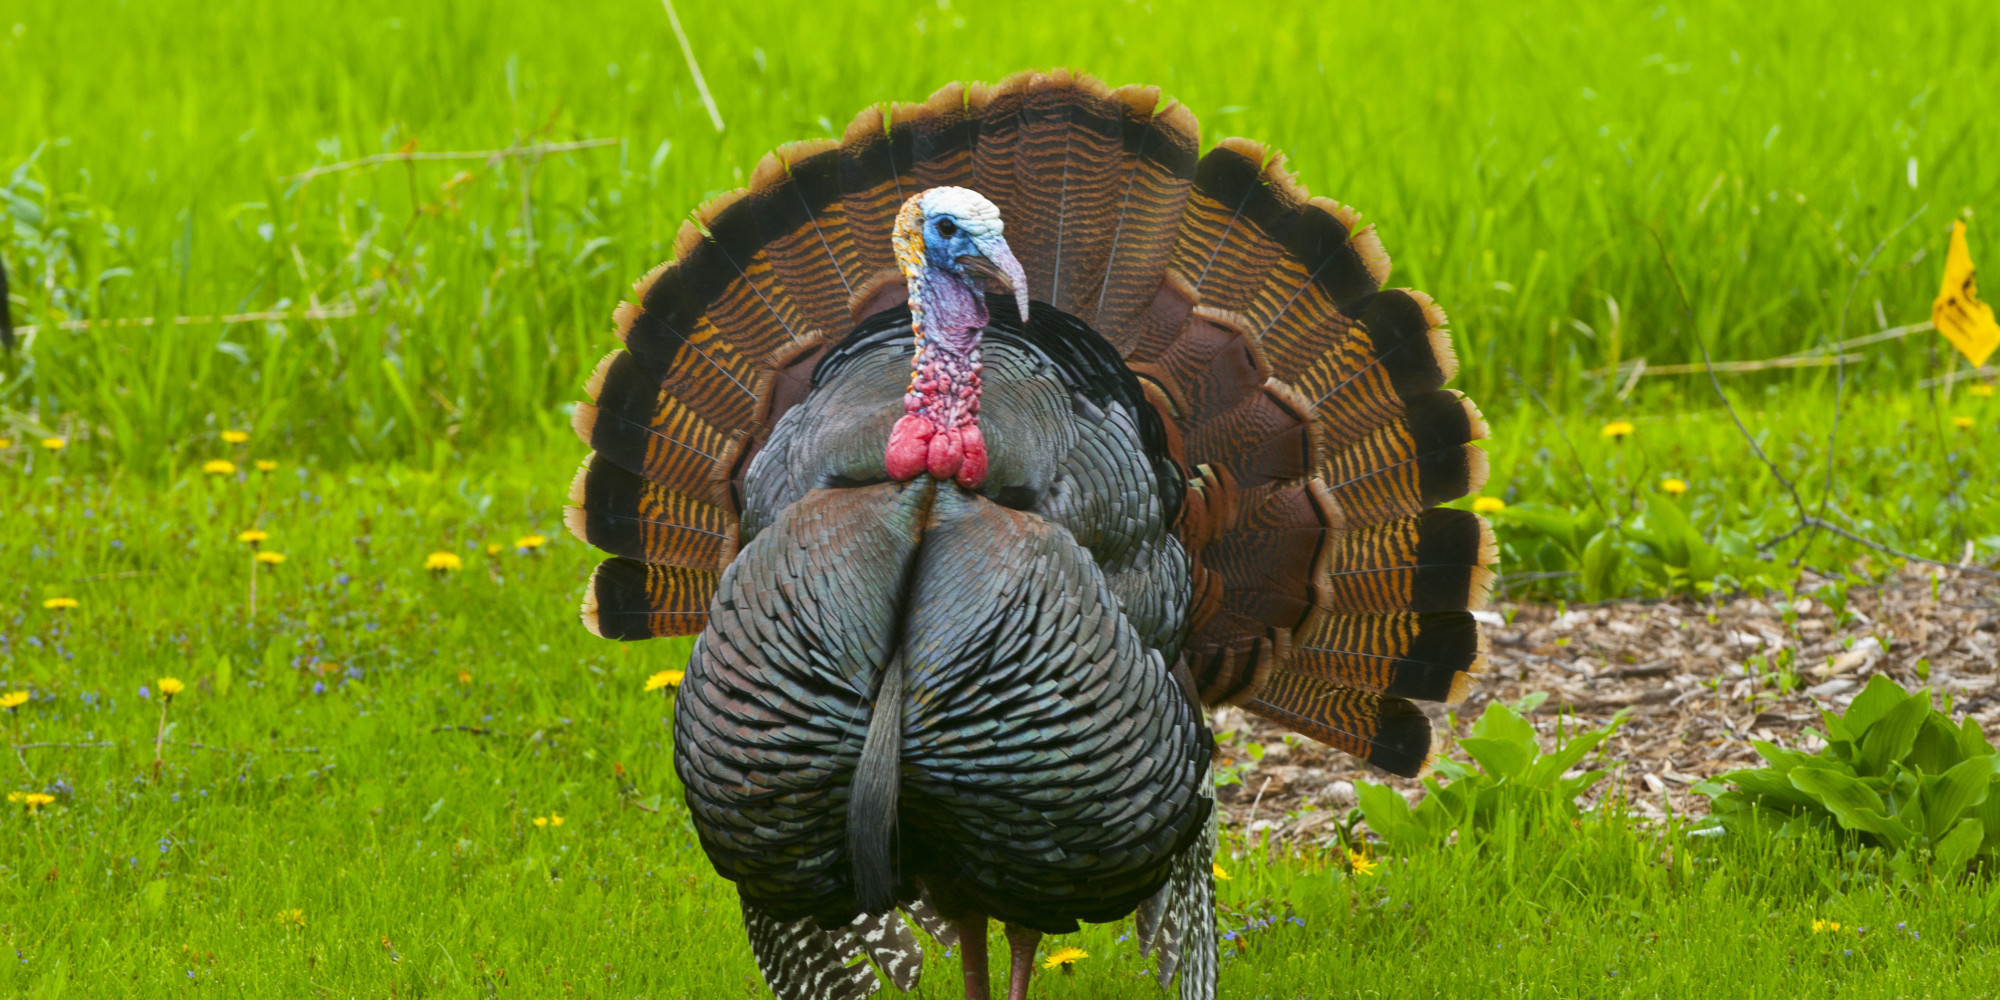 Pics Of Thanksgiving Turkey
 A Feast Ways To Support Humane Treatment Turkeys